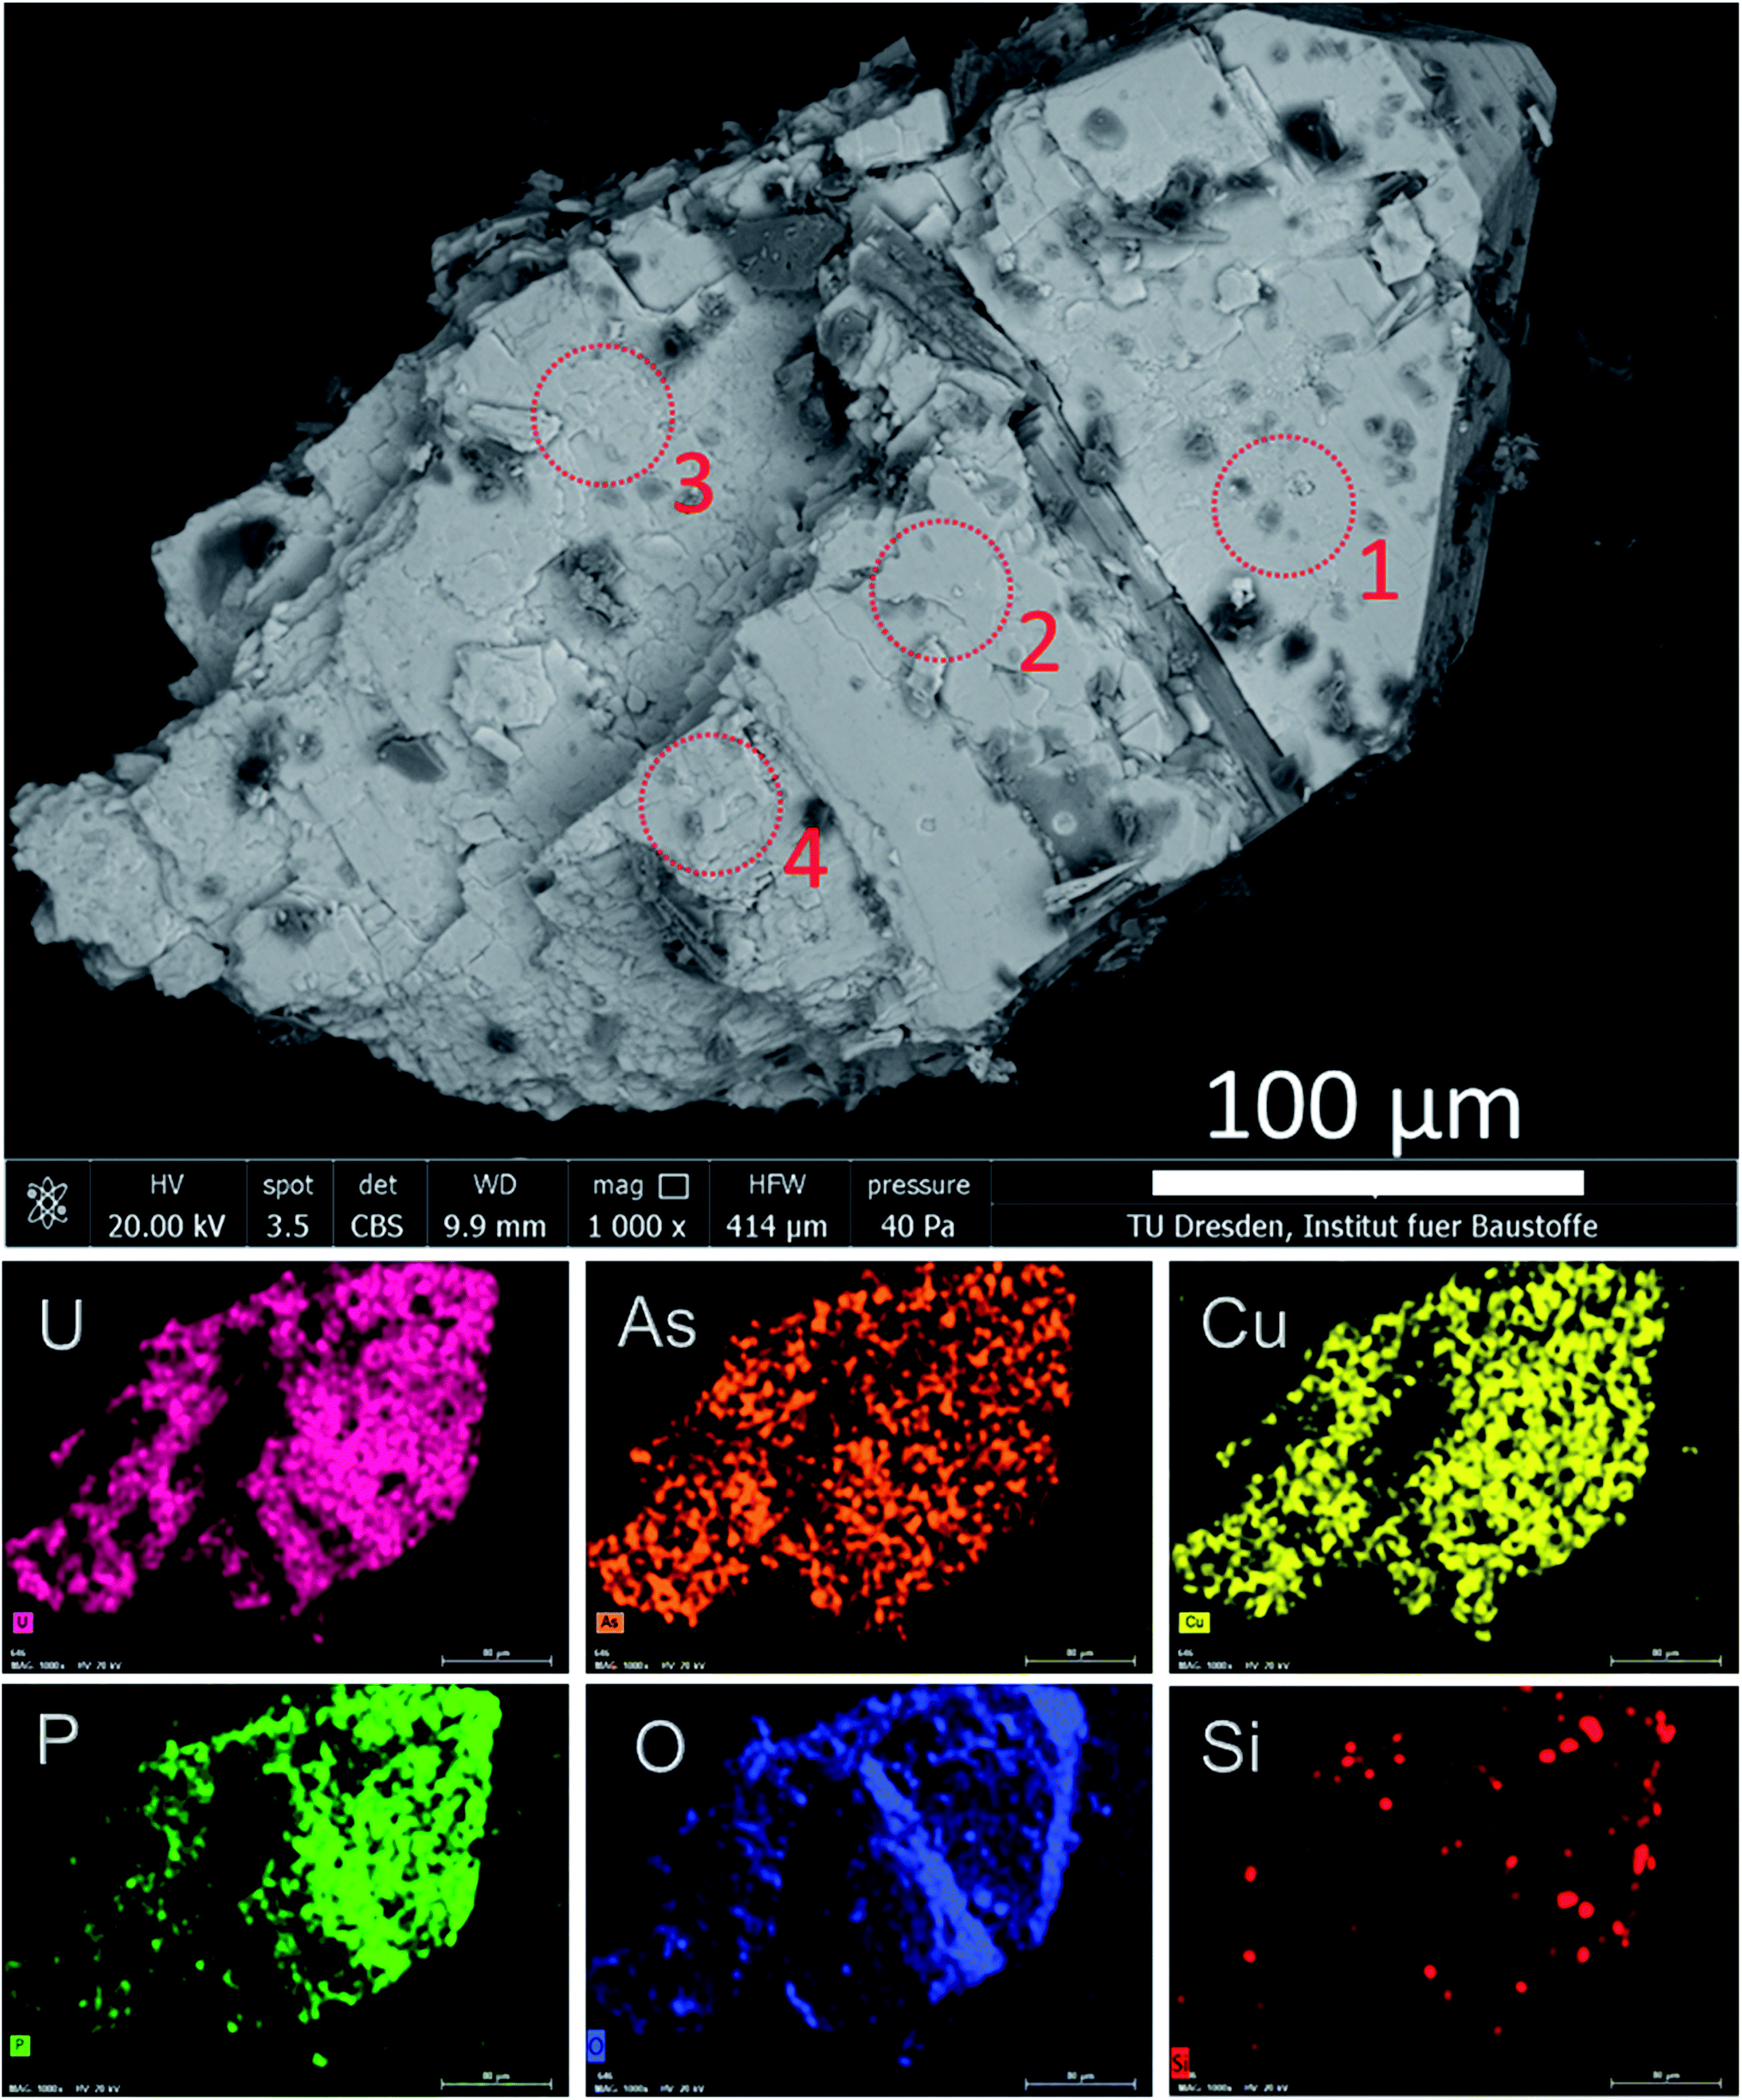 A multi-technique study of altered granitic rock from the Krunkelbach  Valley uranium deposit, Southern Germany - RSC Advances (RSC Publishing)  DOI:10.1039/D0RA03375H